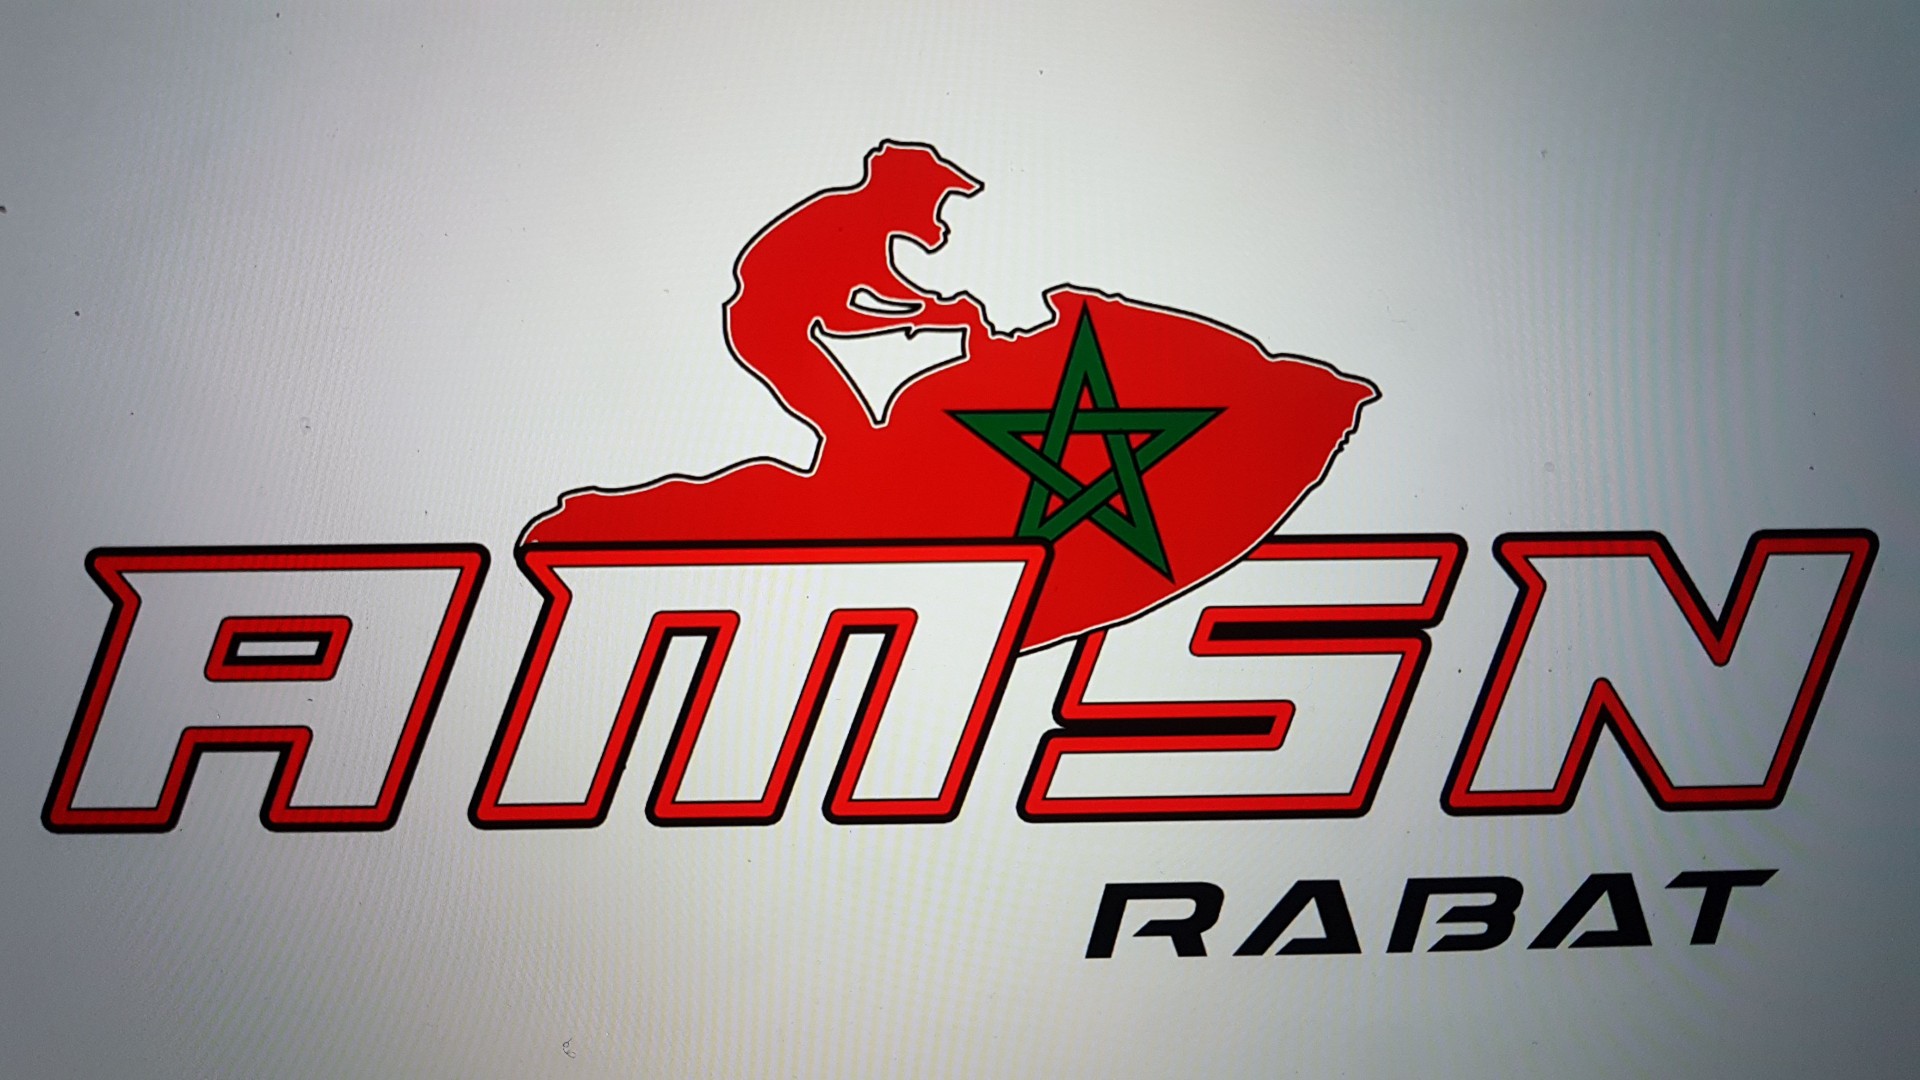 Association Marocaine des Sports Nautiques Rabat logo